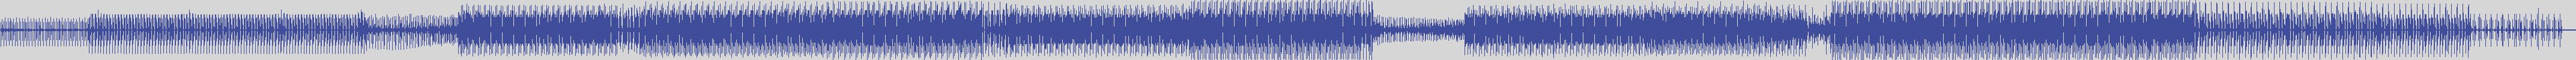 atomic_recordings [AR019] Paolo Driver - Misaki [Minimal Mix] audio wave form